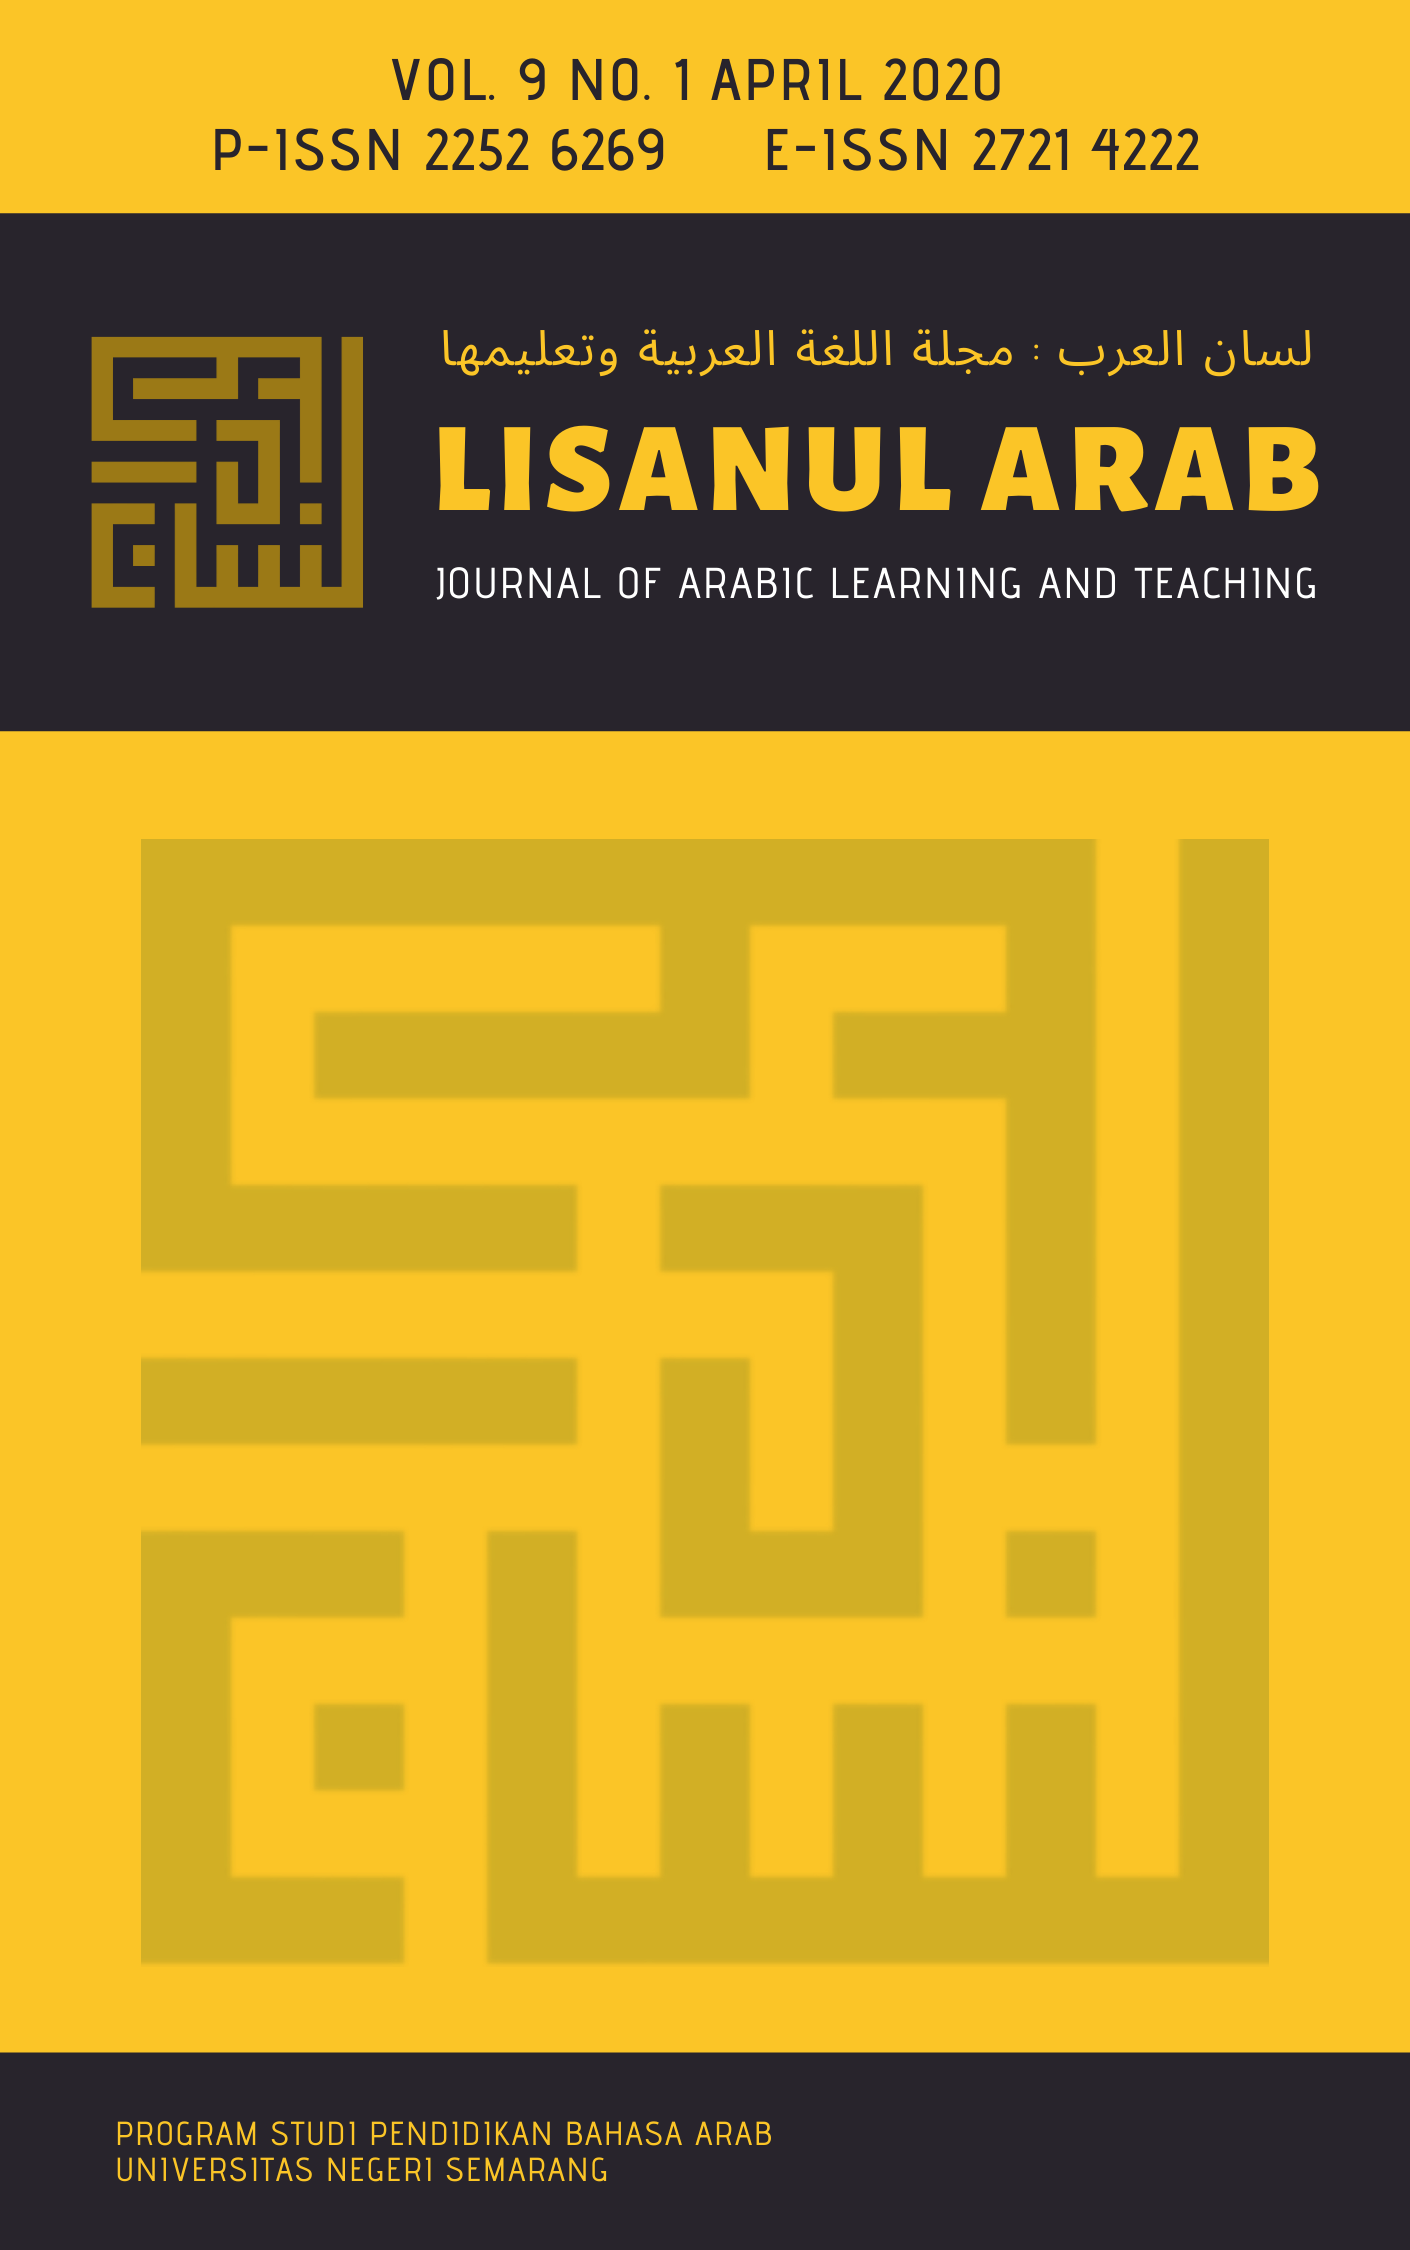 sampul terbaru jurnal Lisan Al-Arab